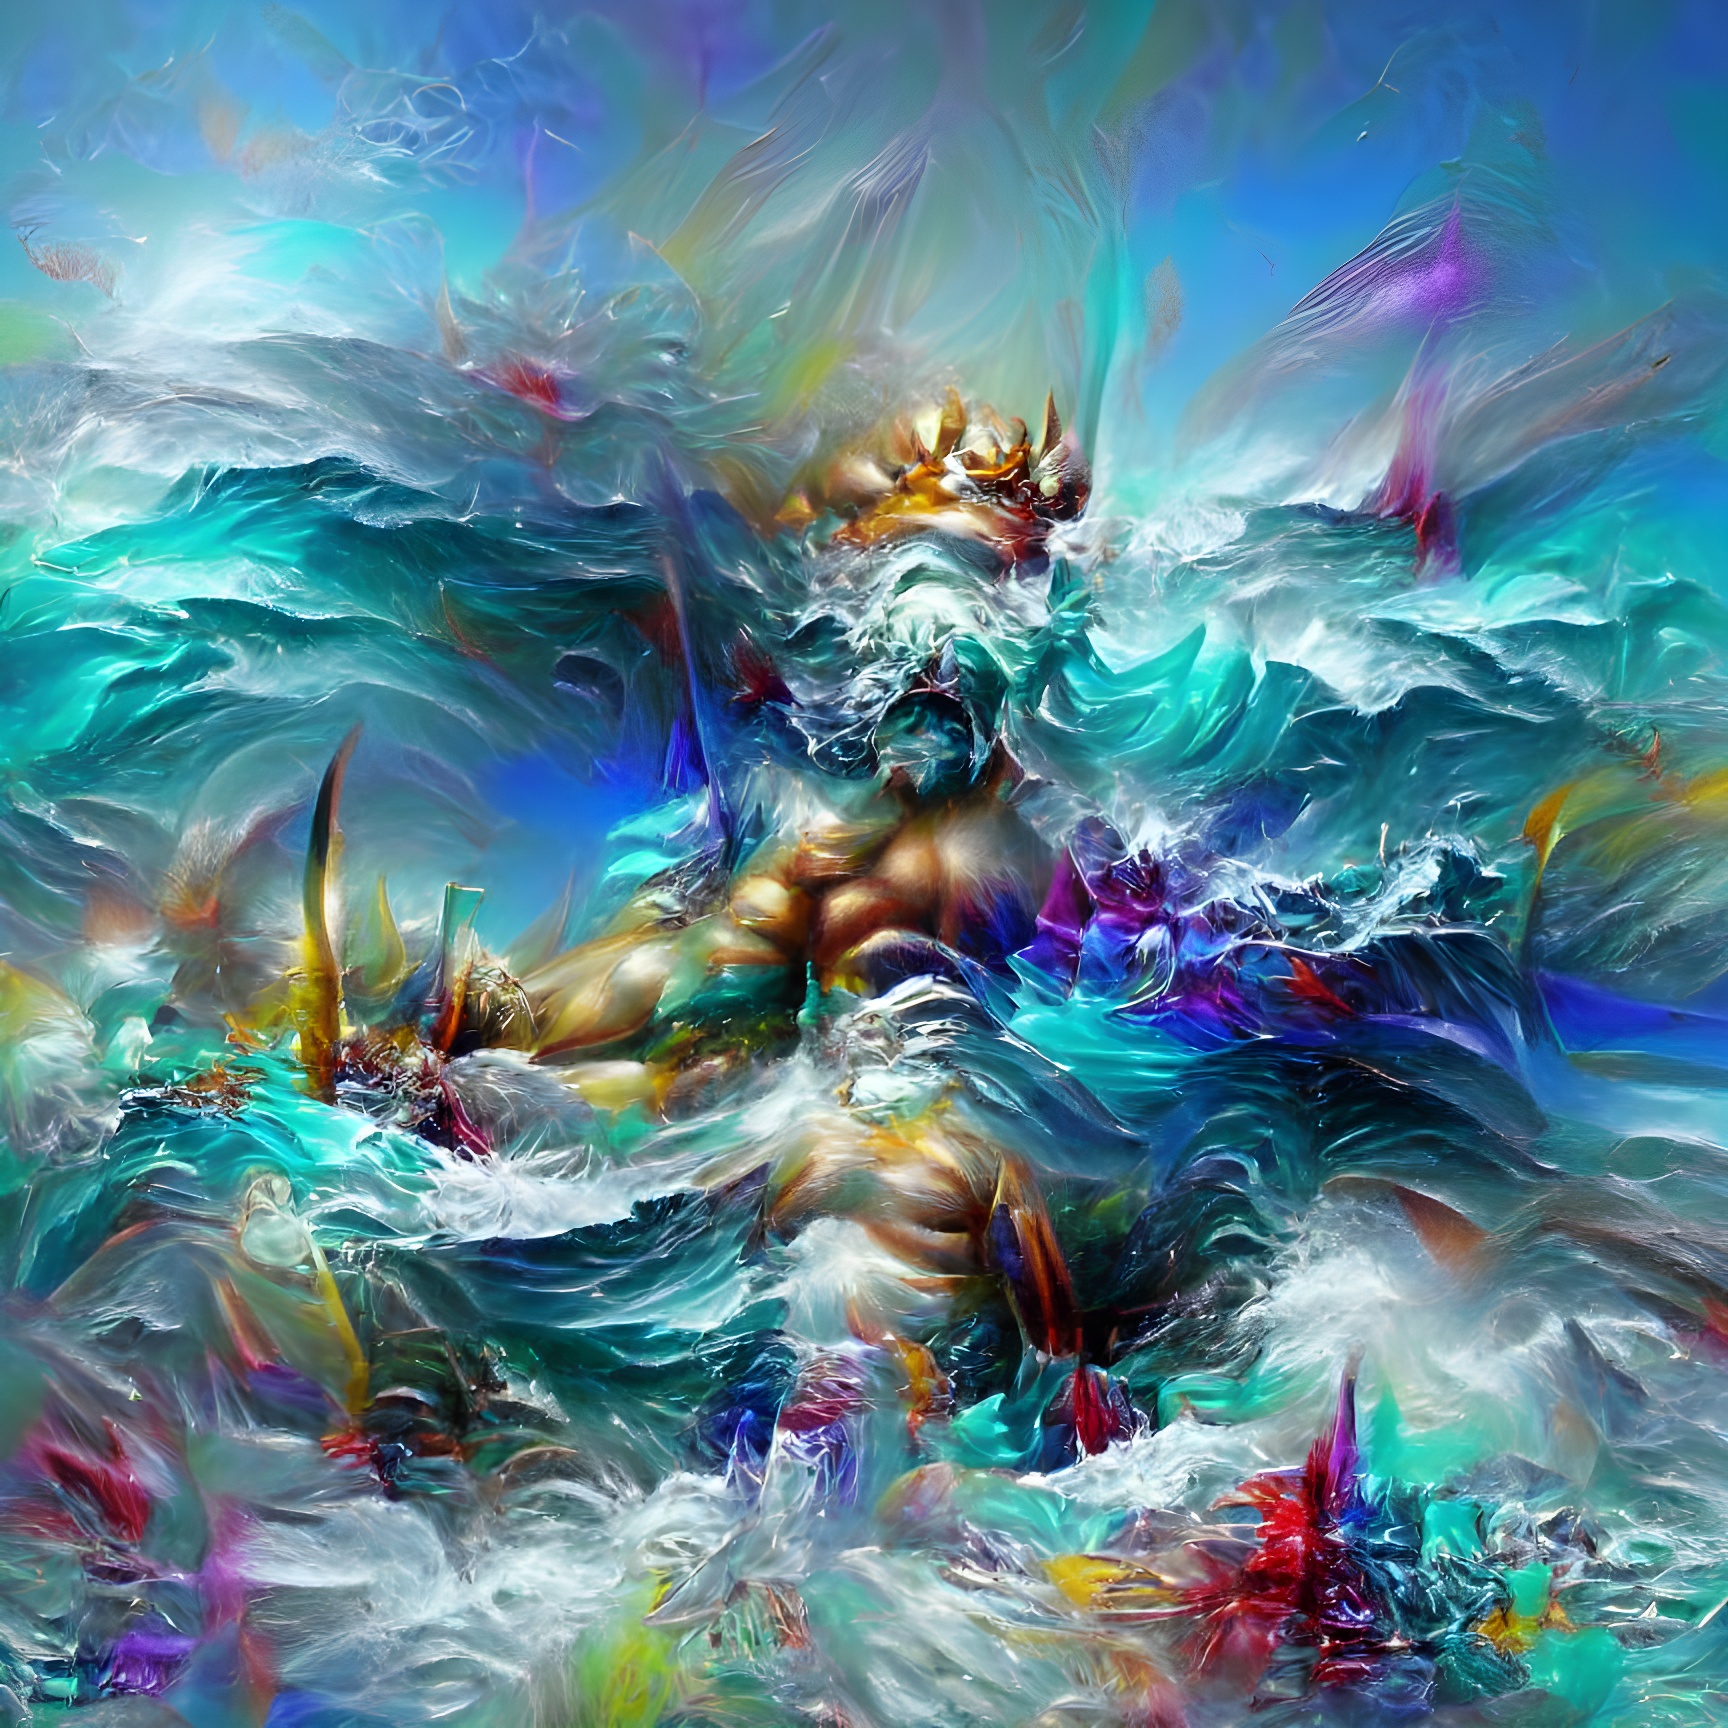 Poseidon - god of the Sea